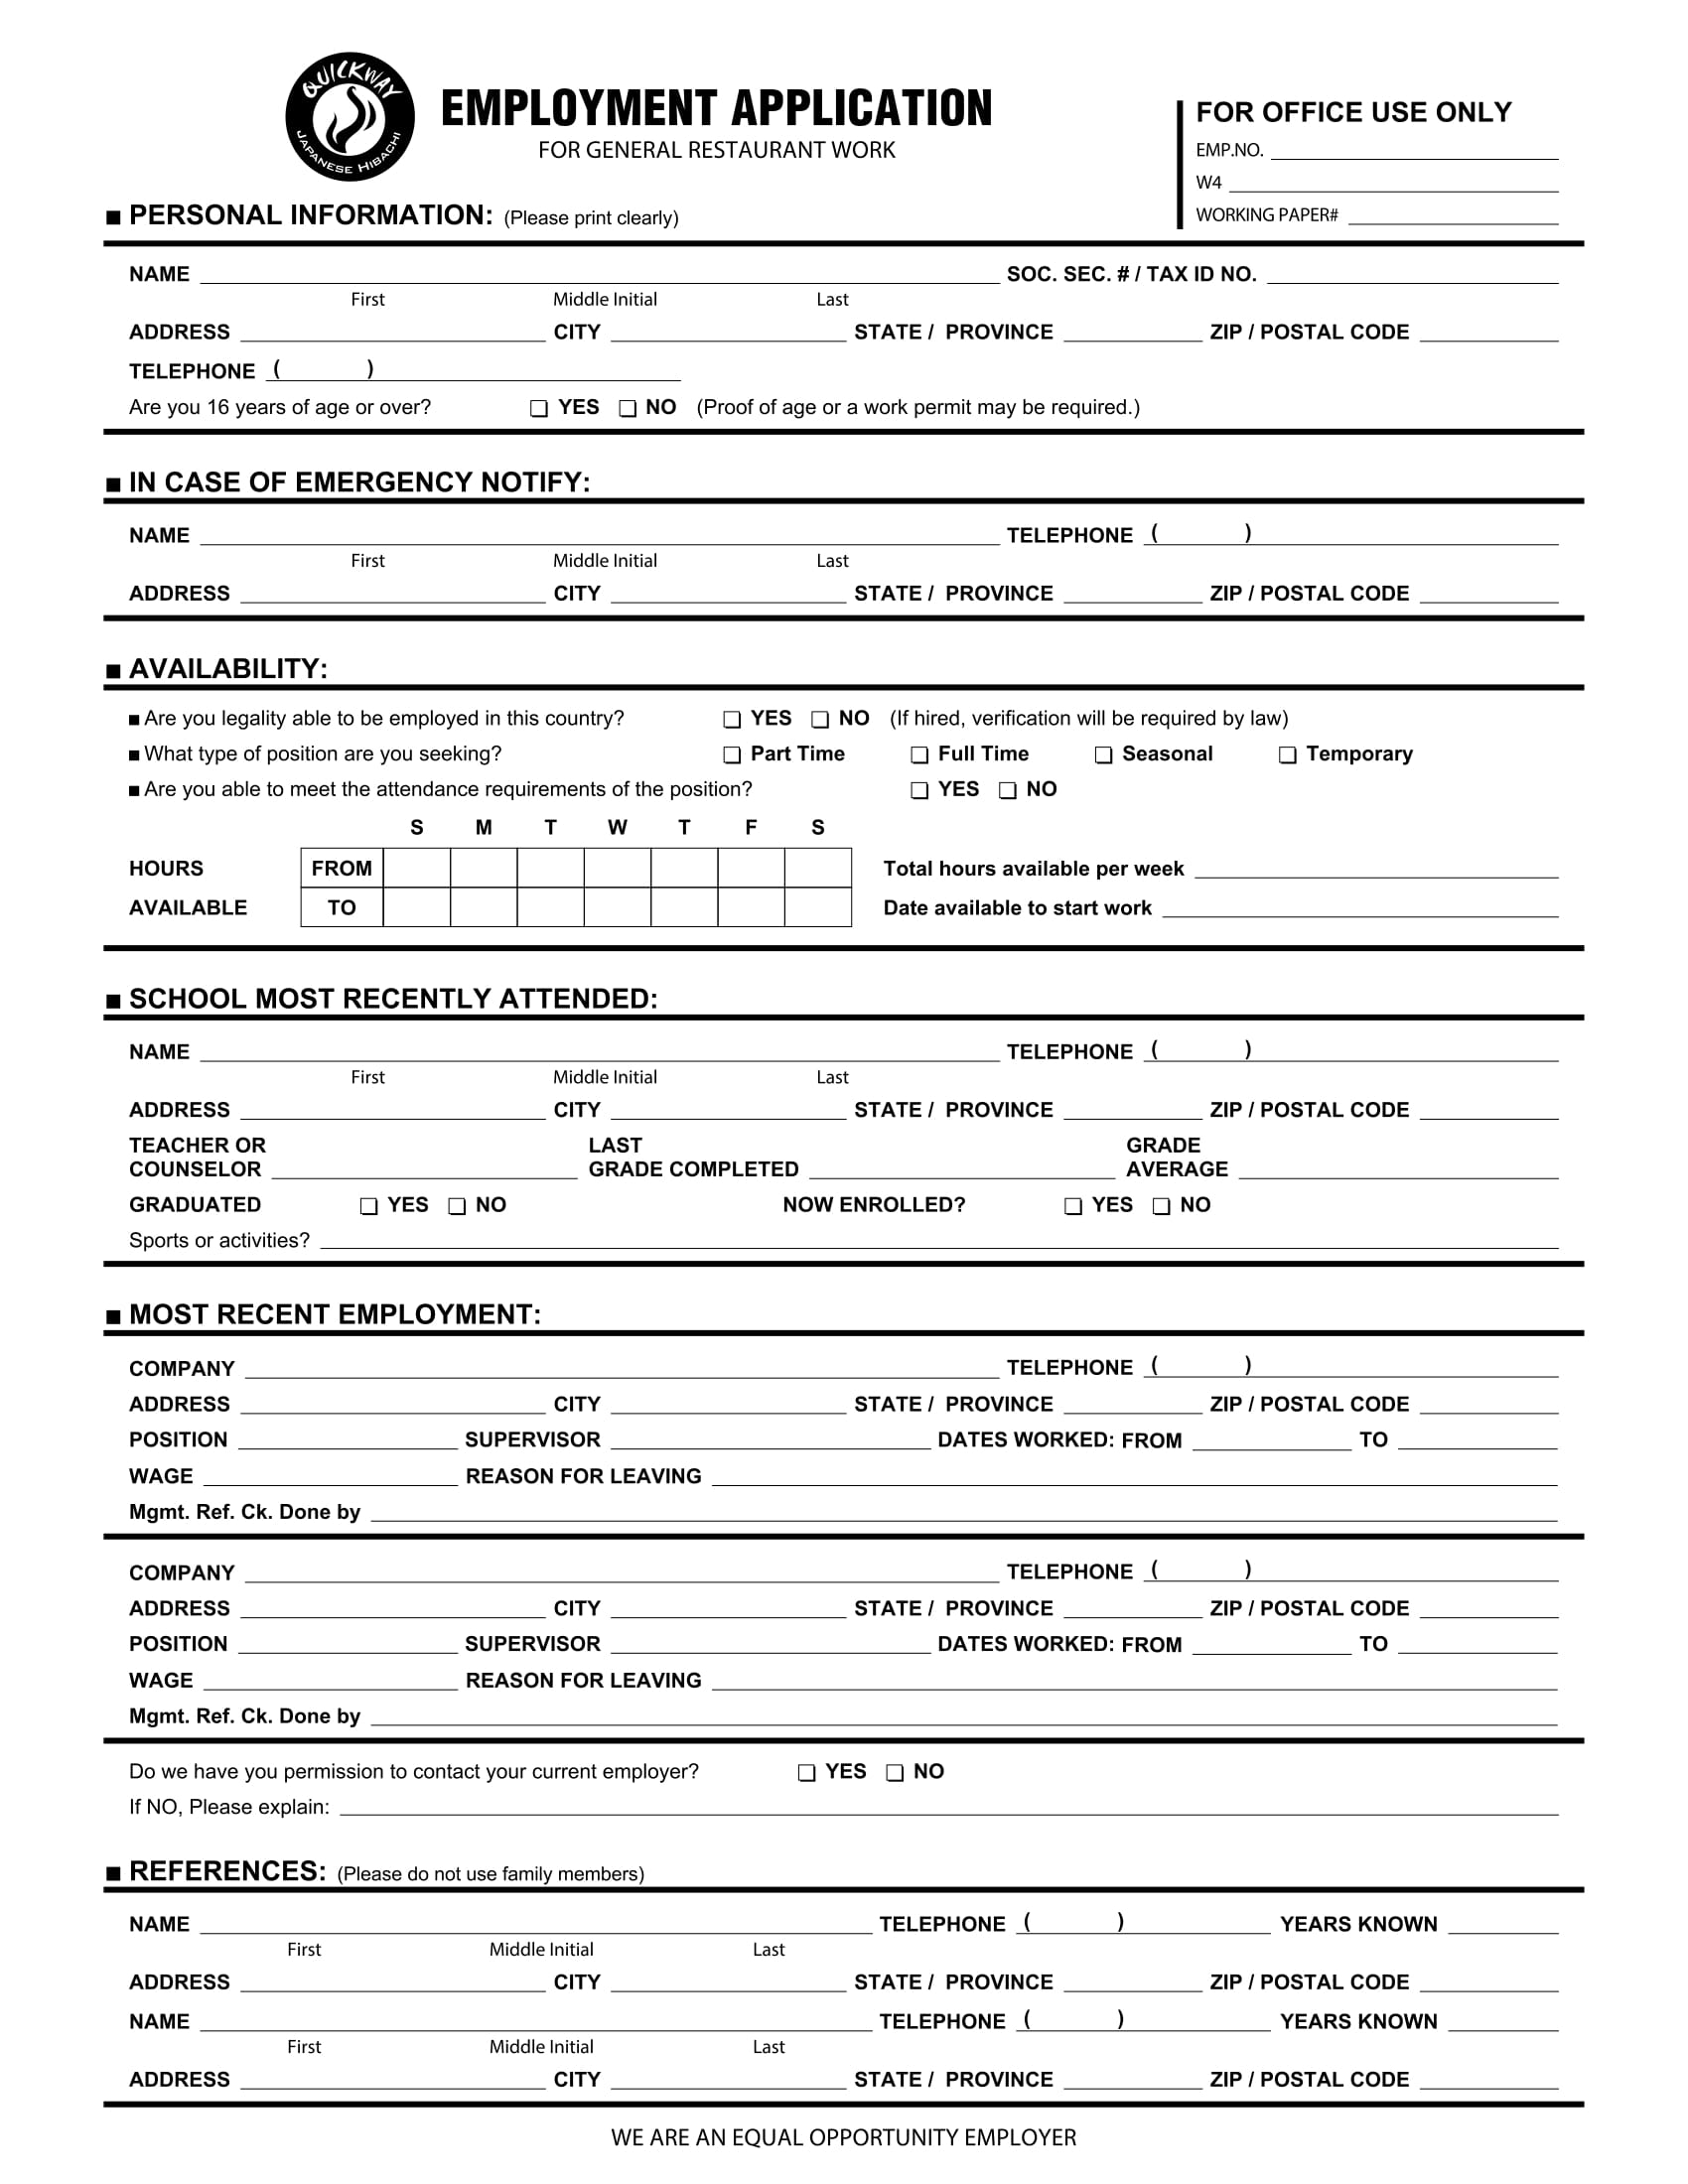 general employment application form 1